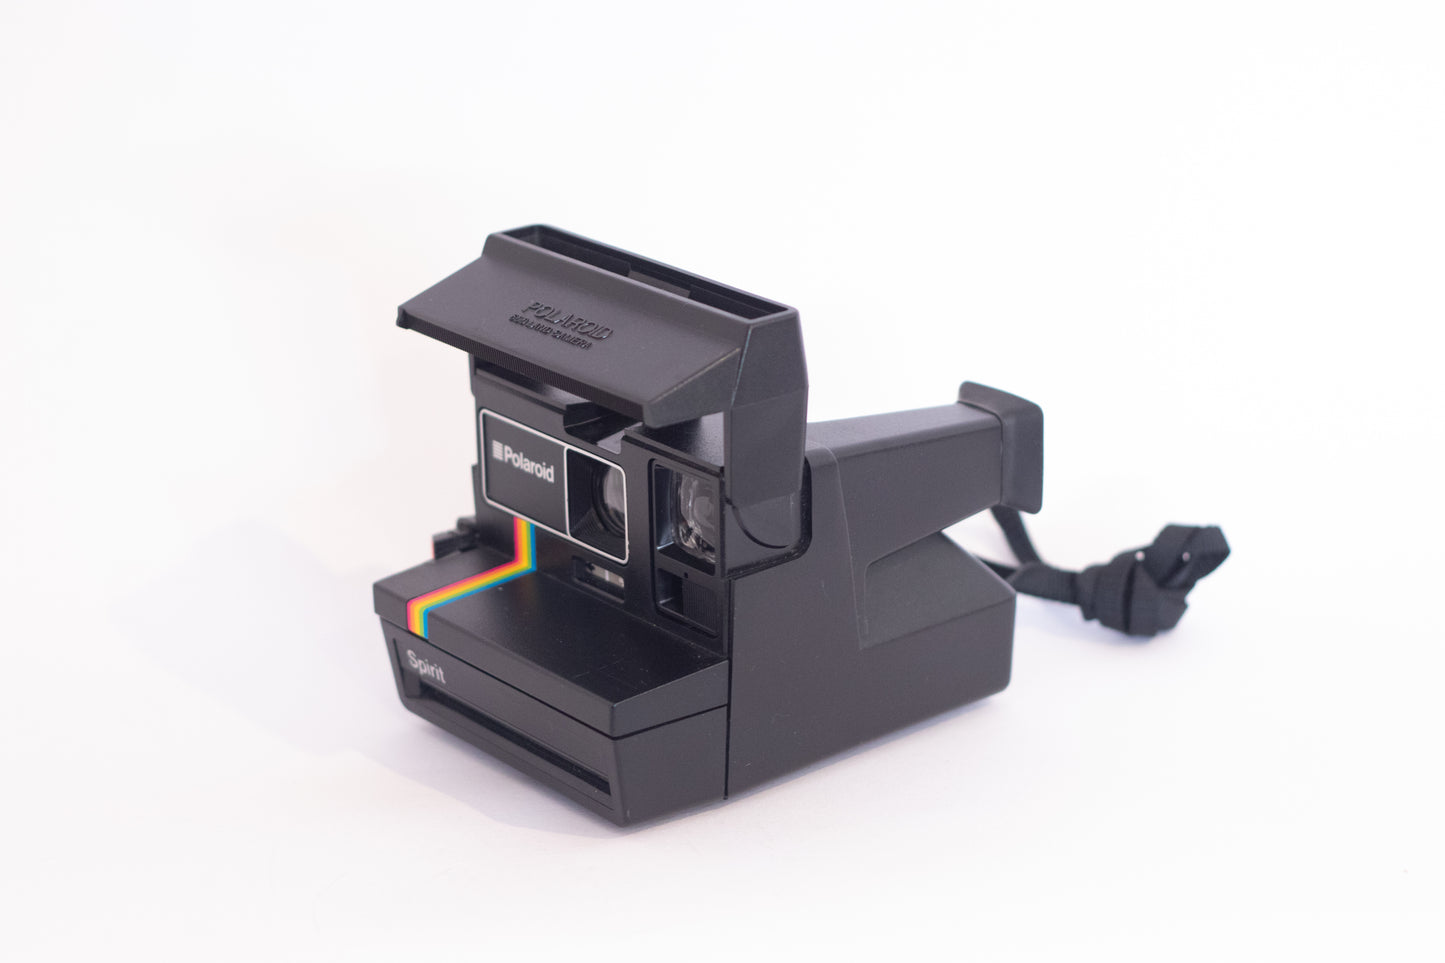 Polaroid OneStep 600 Land Camera Spirit Rainbow